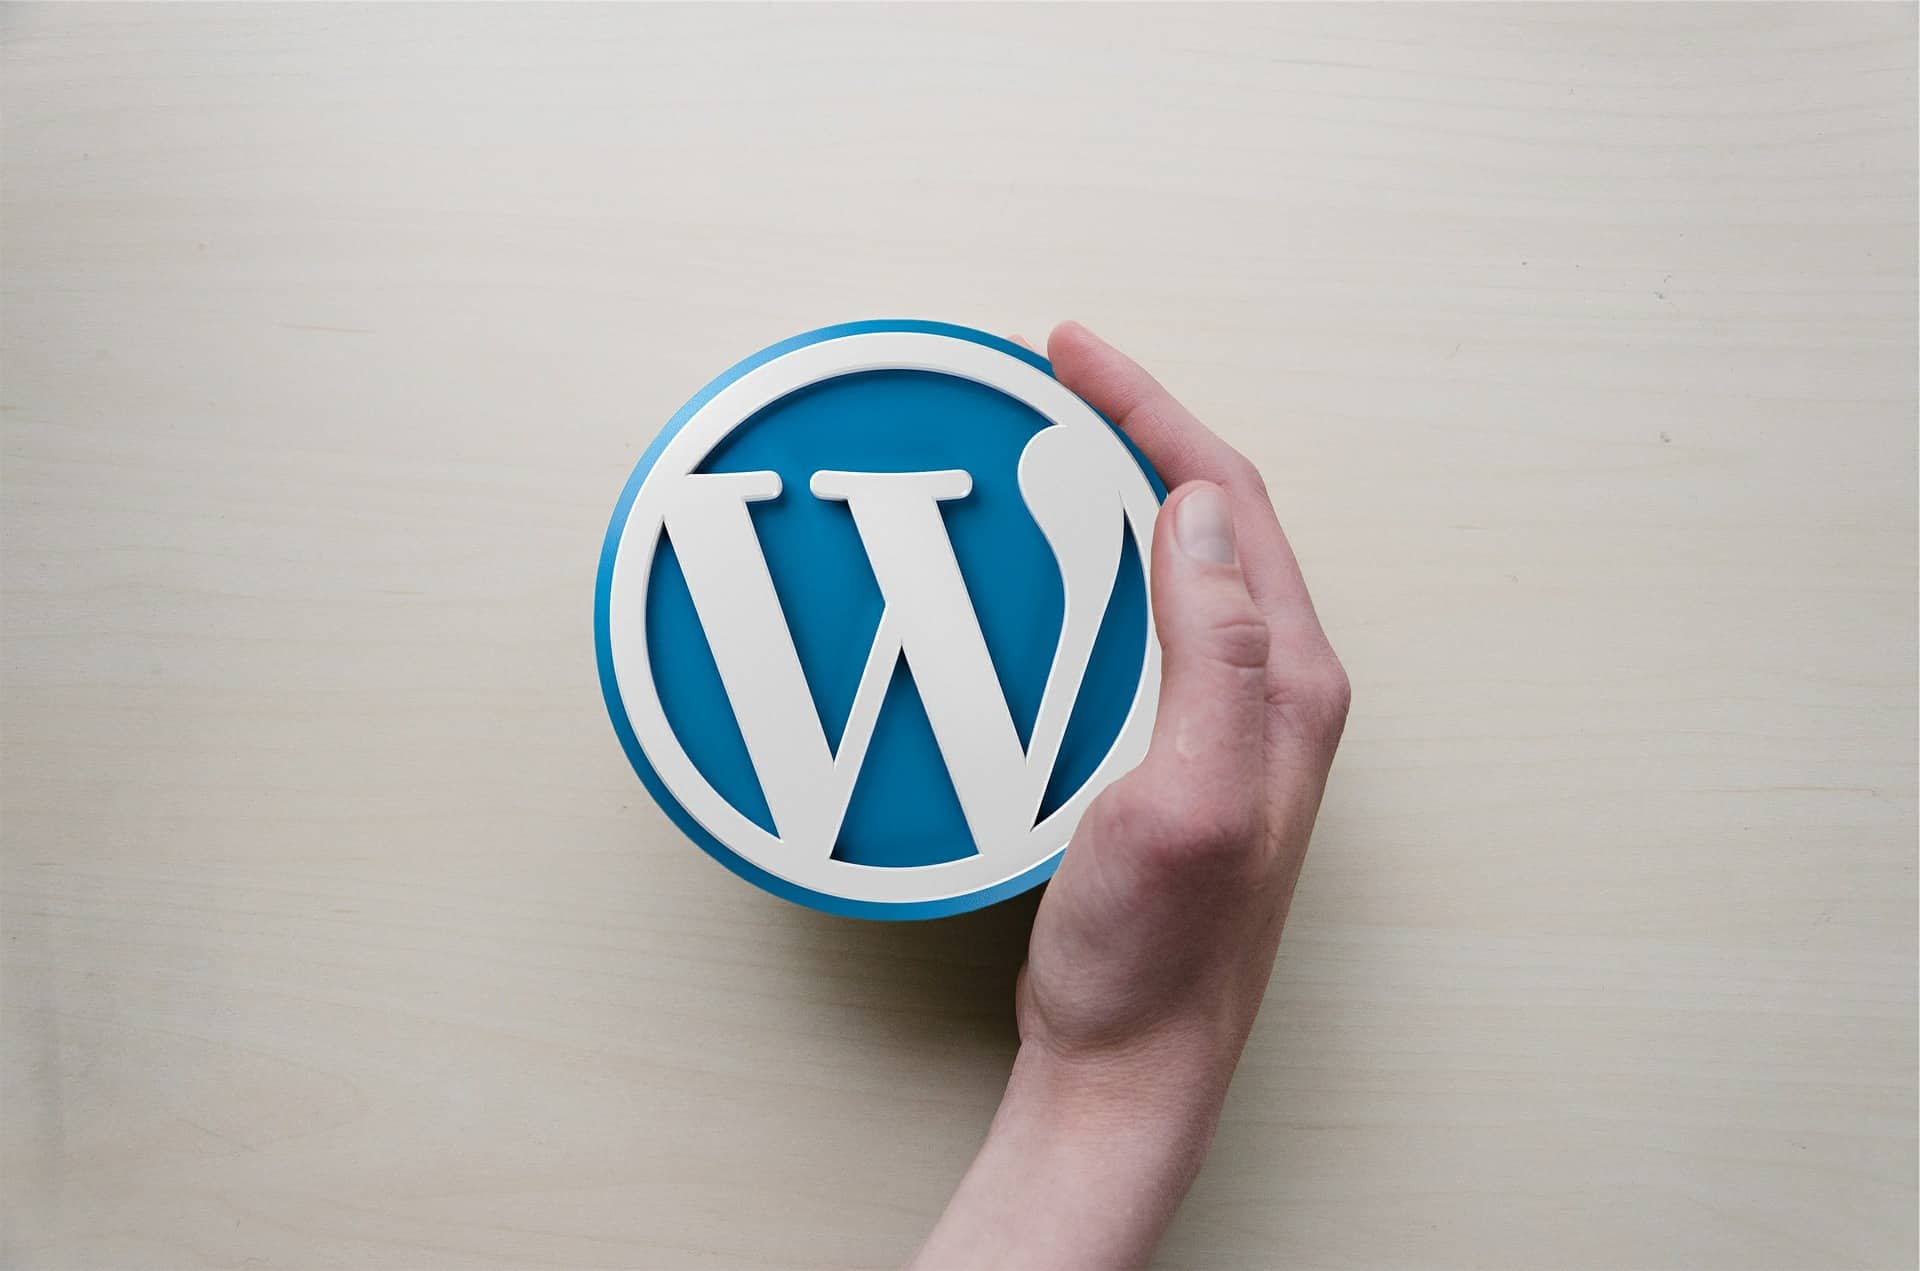 A hand holding the WordPress logo